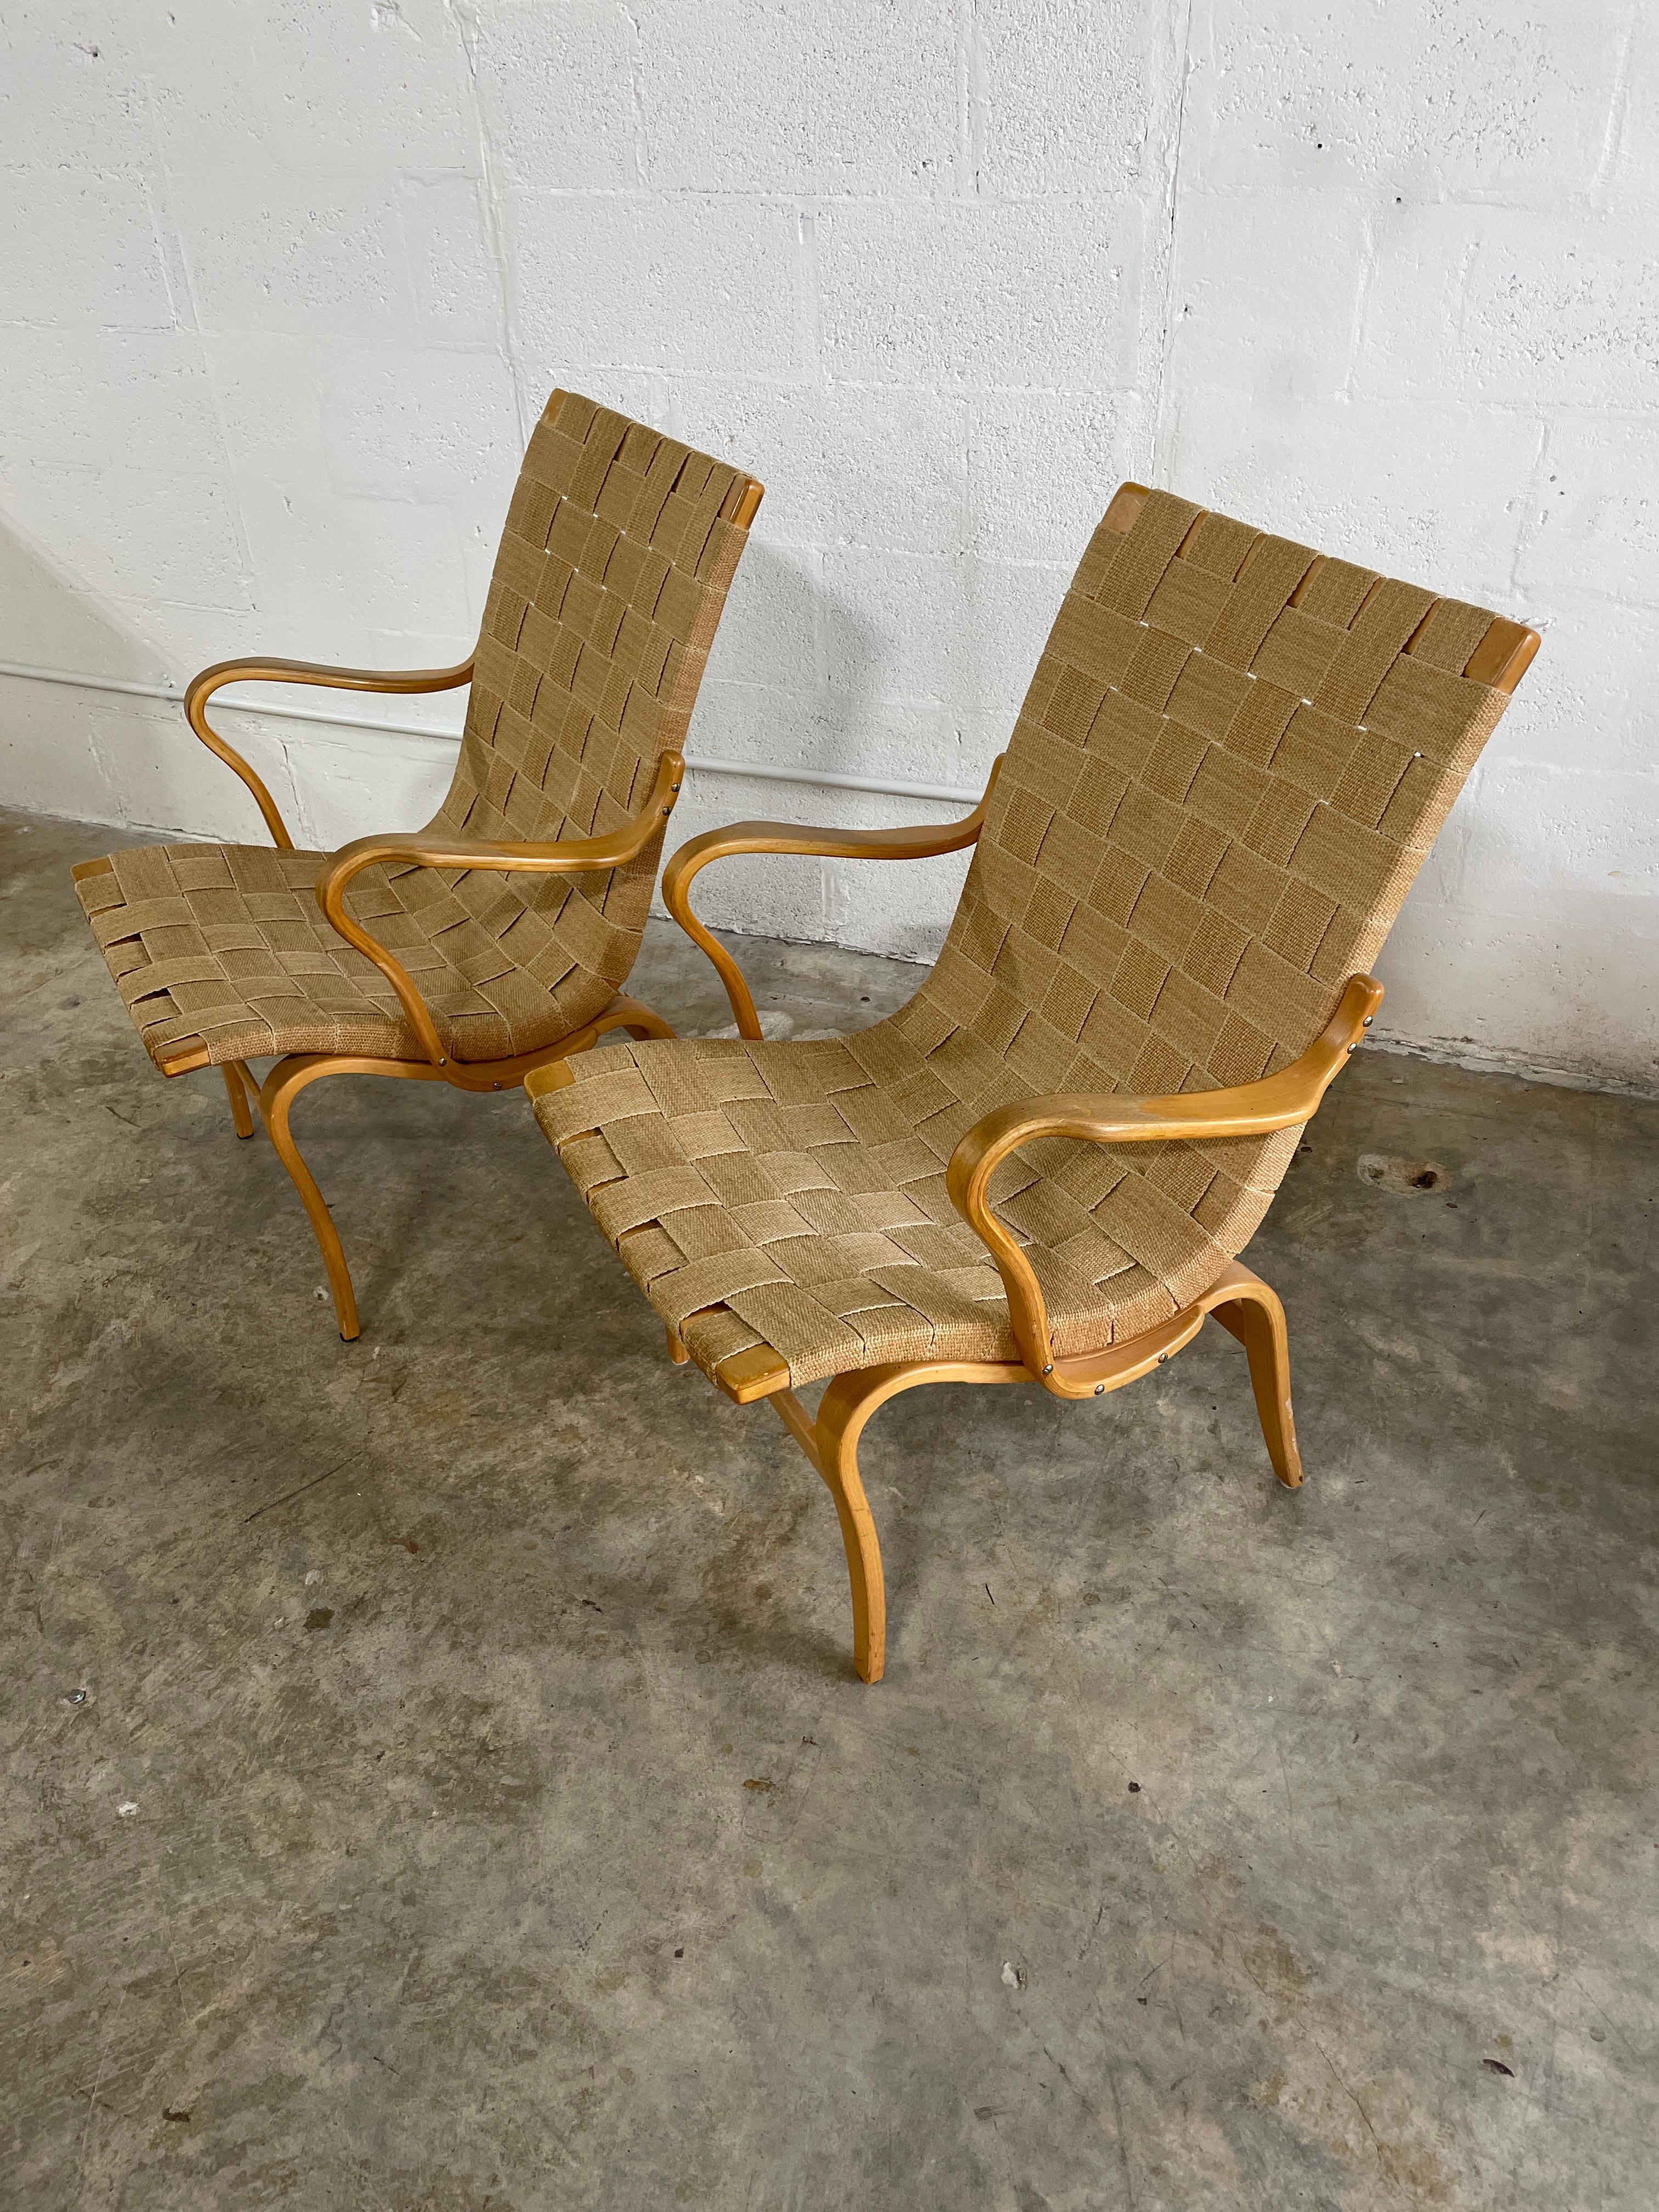 Pine Bruno Mathsson “Eva” Chairs Mid Century Modern - a Pair For Sale